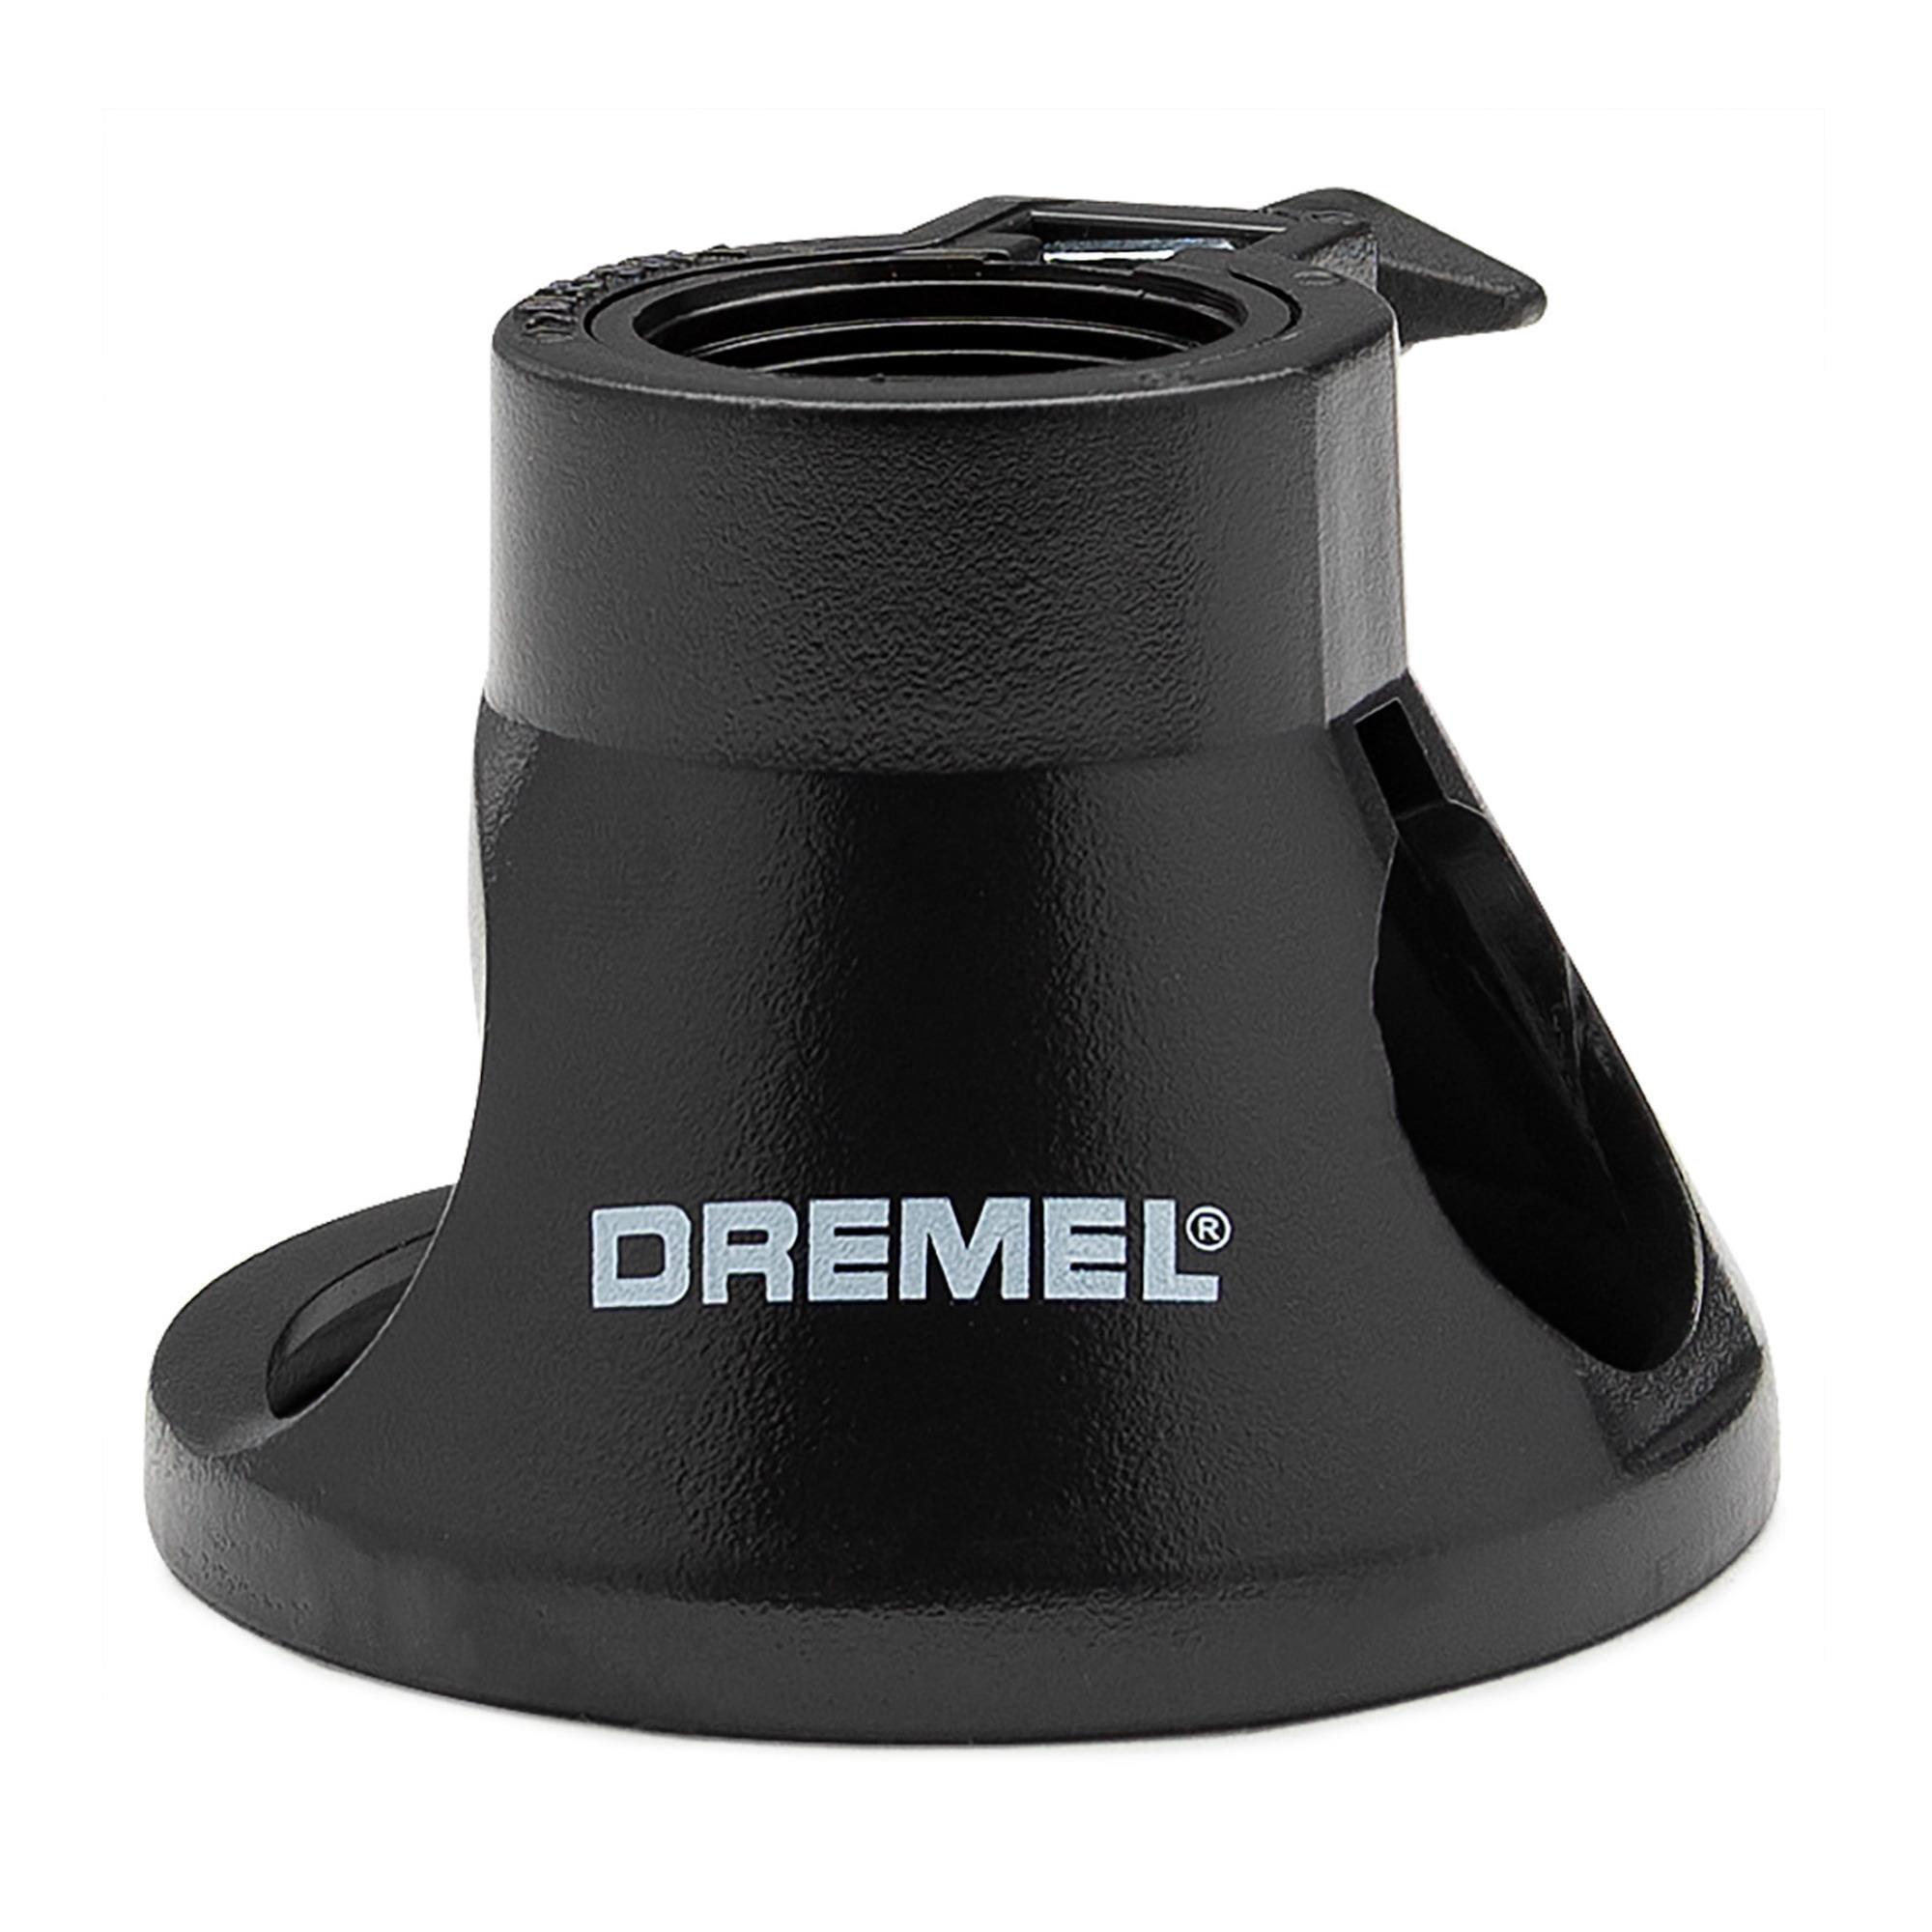 Dremel 4300-5/40 High Performance Rotary Tool Kit with LED Light